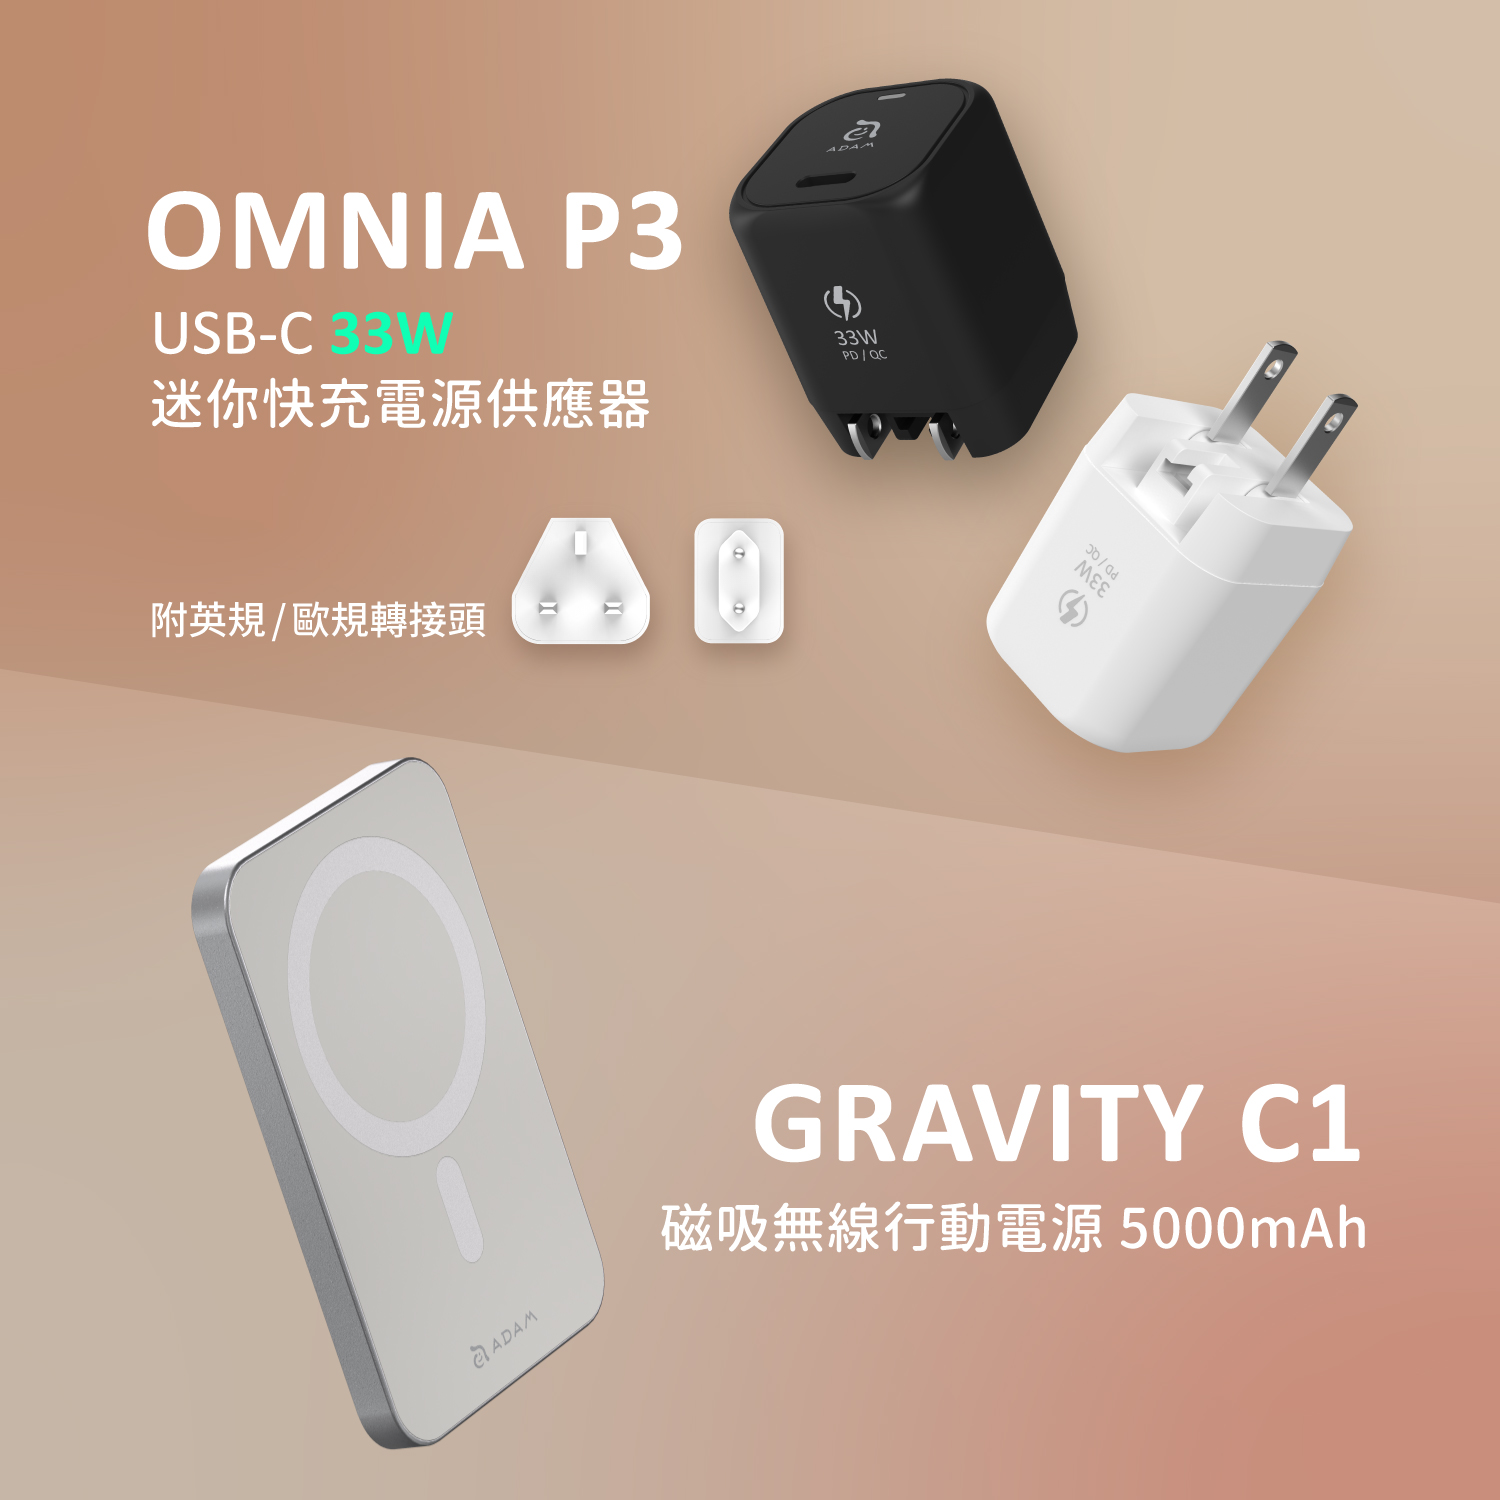 OMNIA P3 USB-C 33W迷你快充器_GRAVITY C1 磁吸無線行動電源